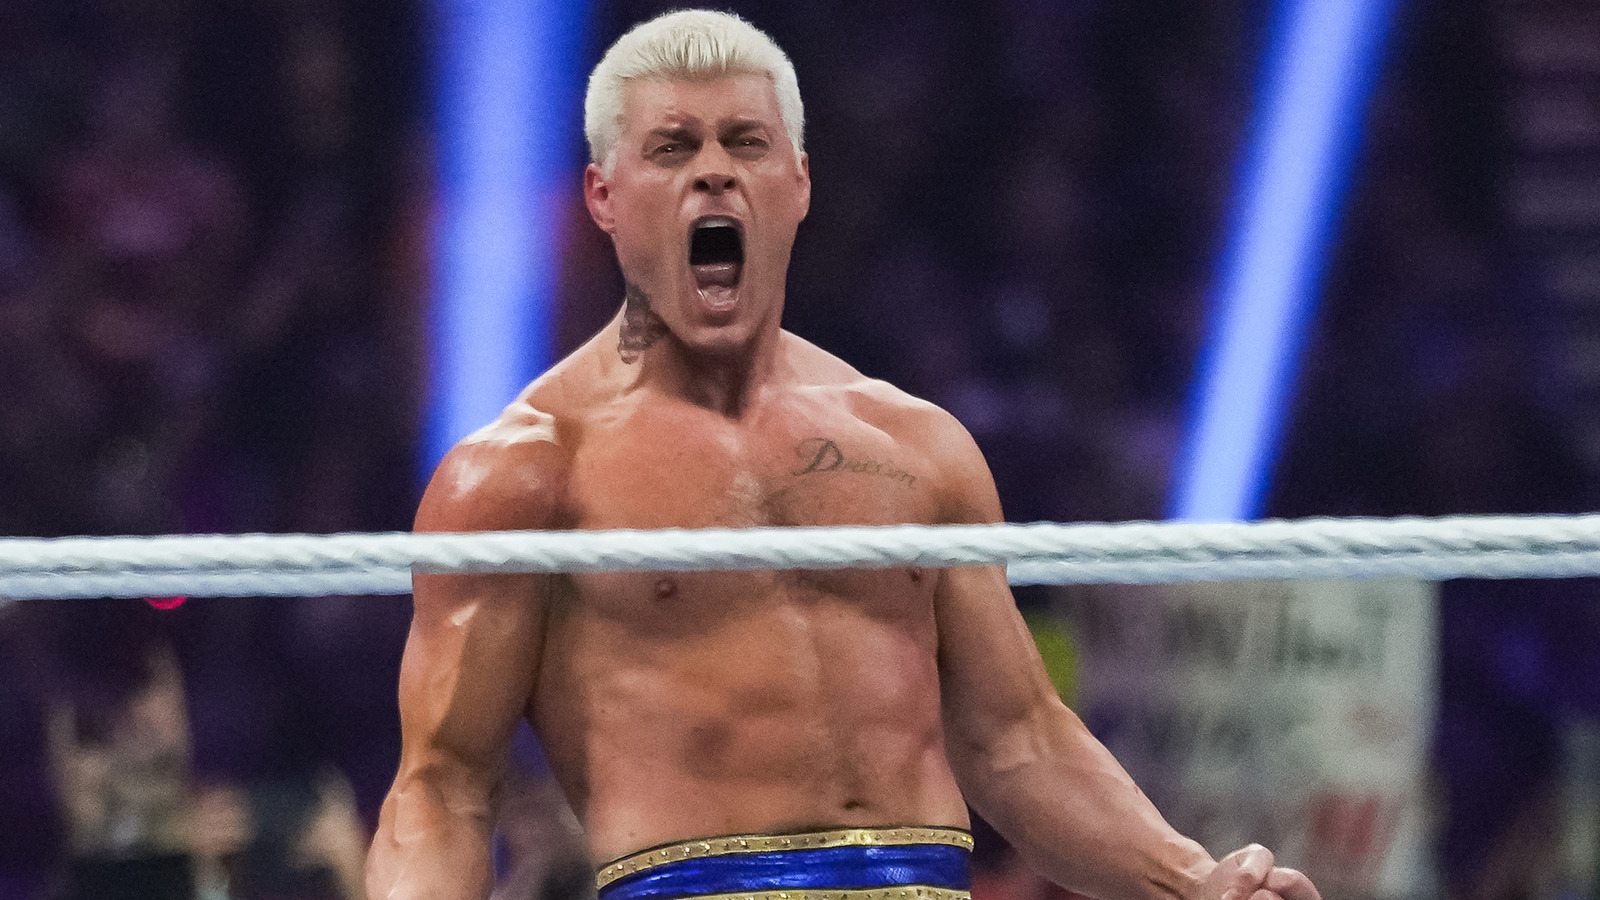 Cody Rhodes Vs. Drew McIntyre, Jey Uso Vs. GUNTHER Set For Next Week's WWE RAW